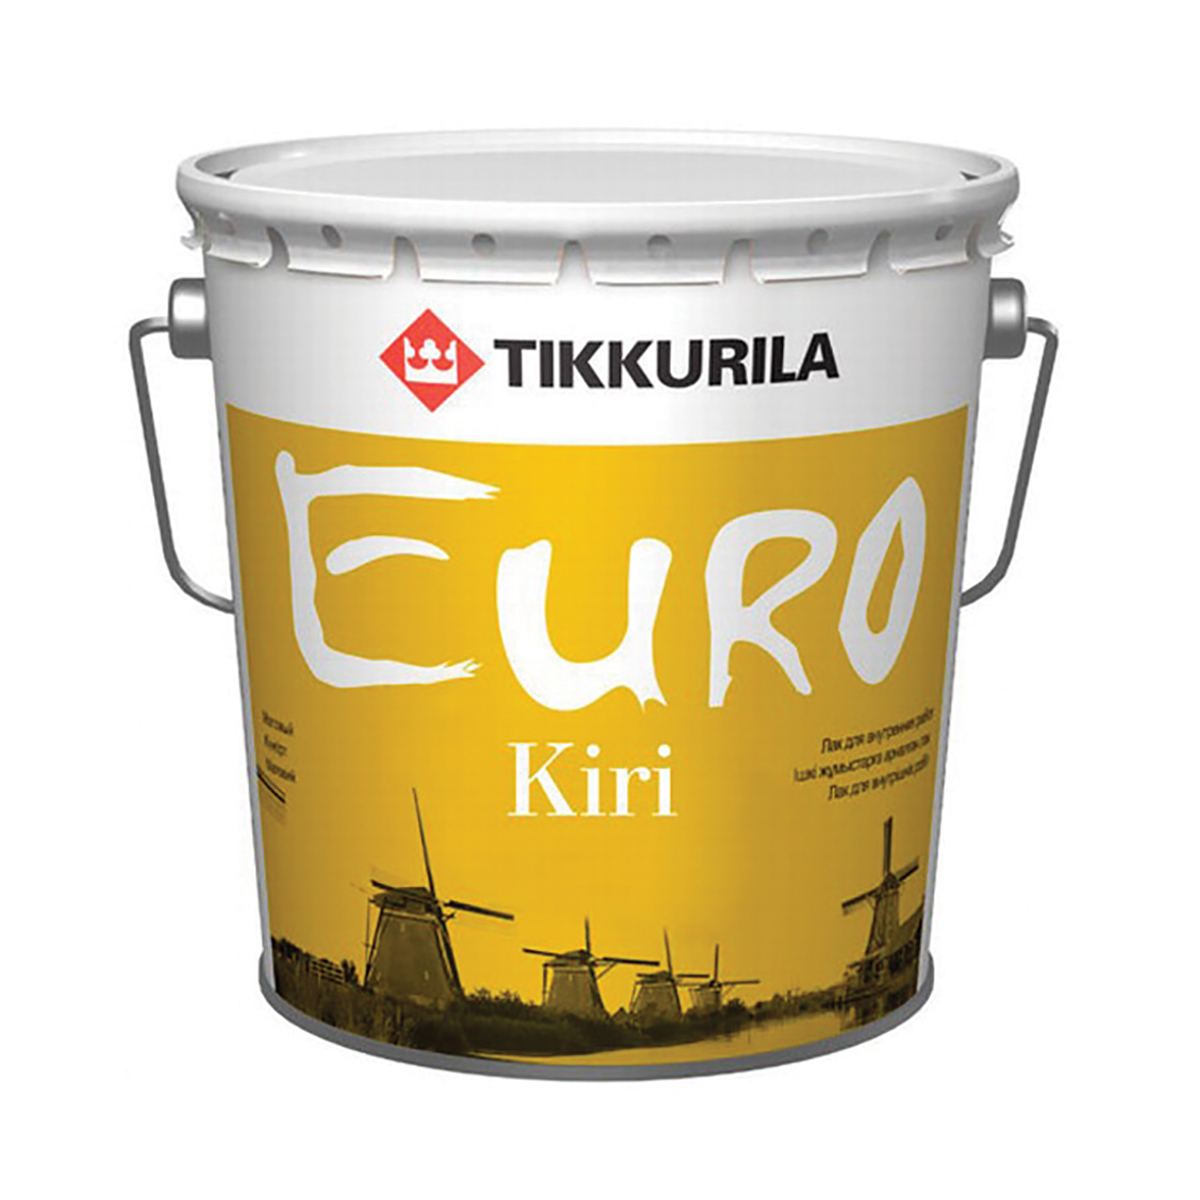 Евро кири / lacquer parquet глянц. 2,7 л (1/6)  лак паркетный "тиккурила"